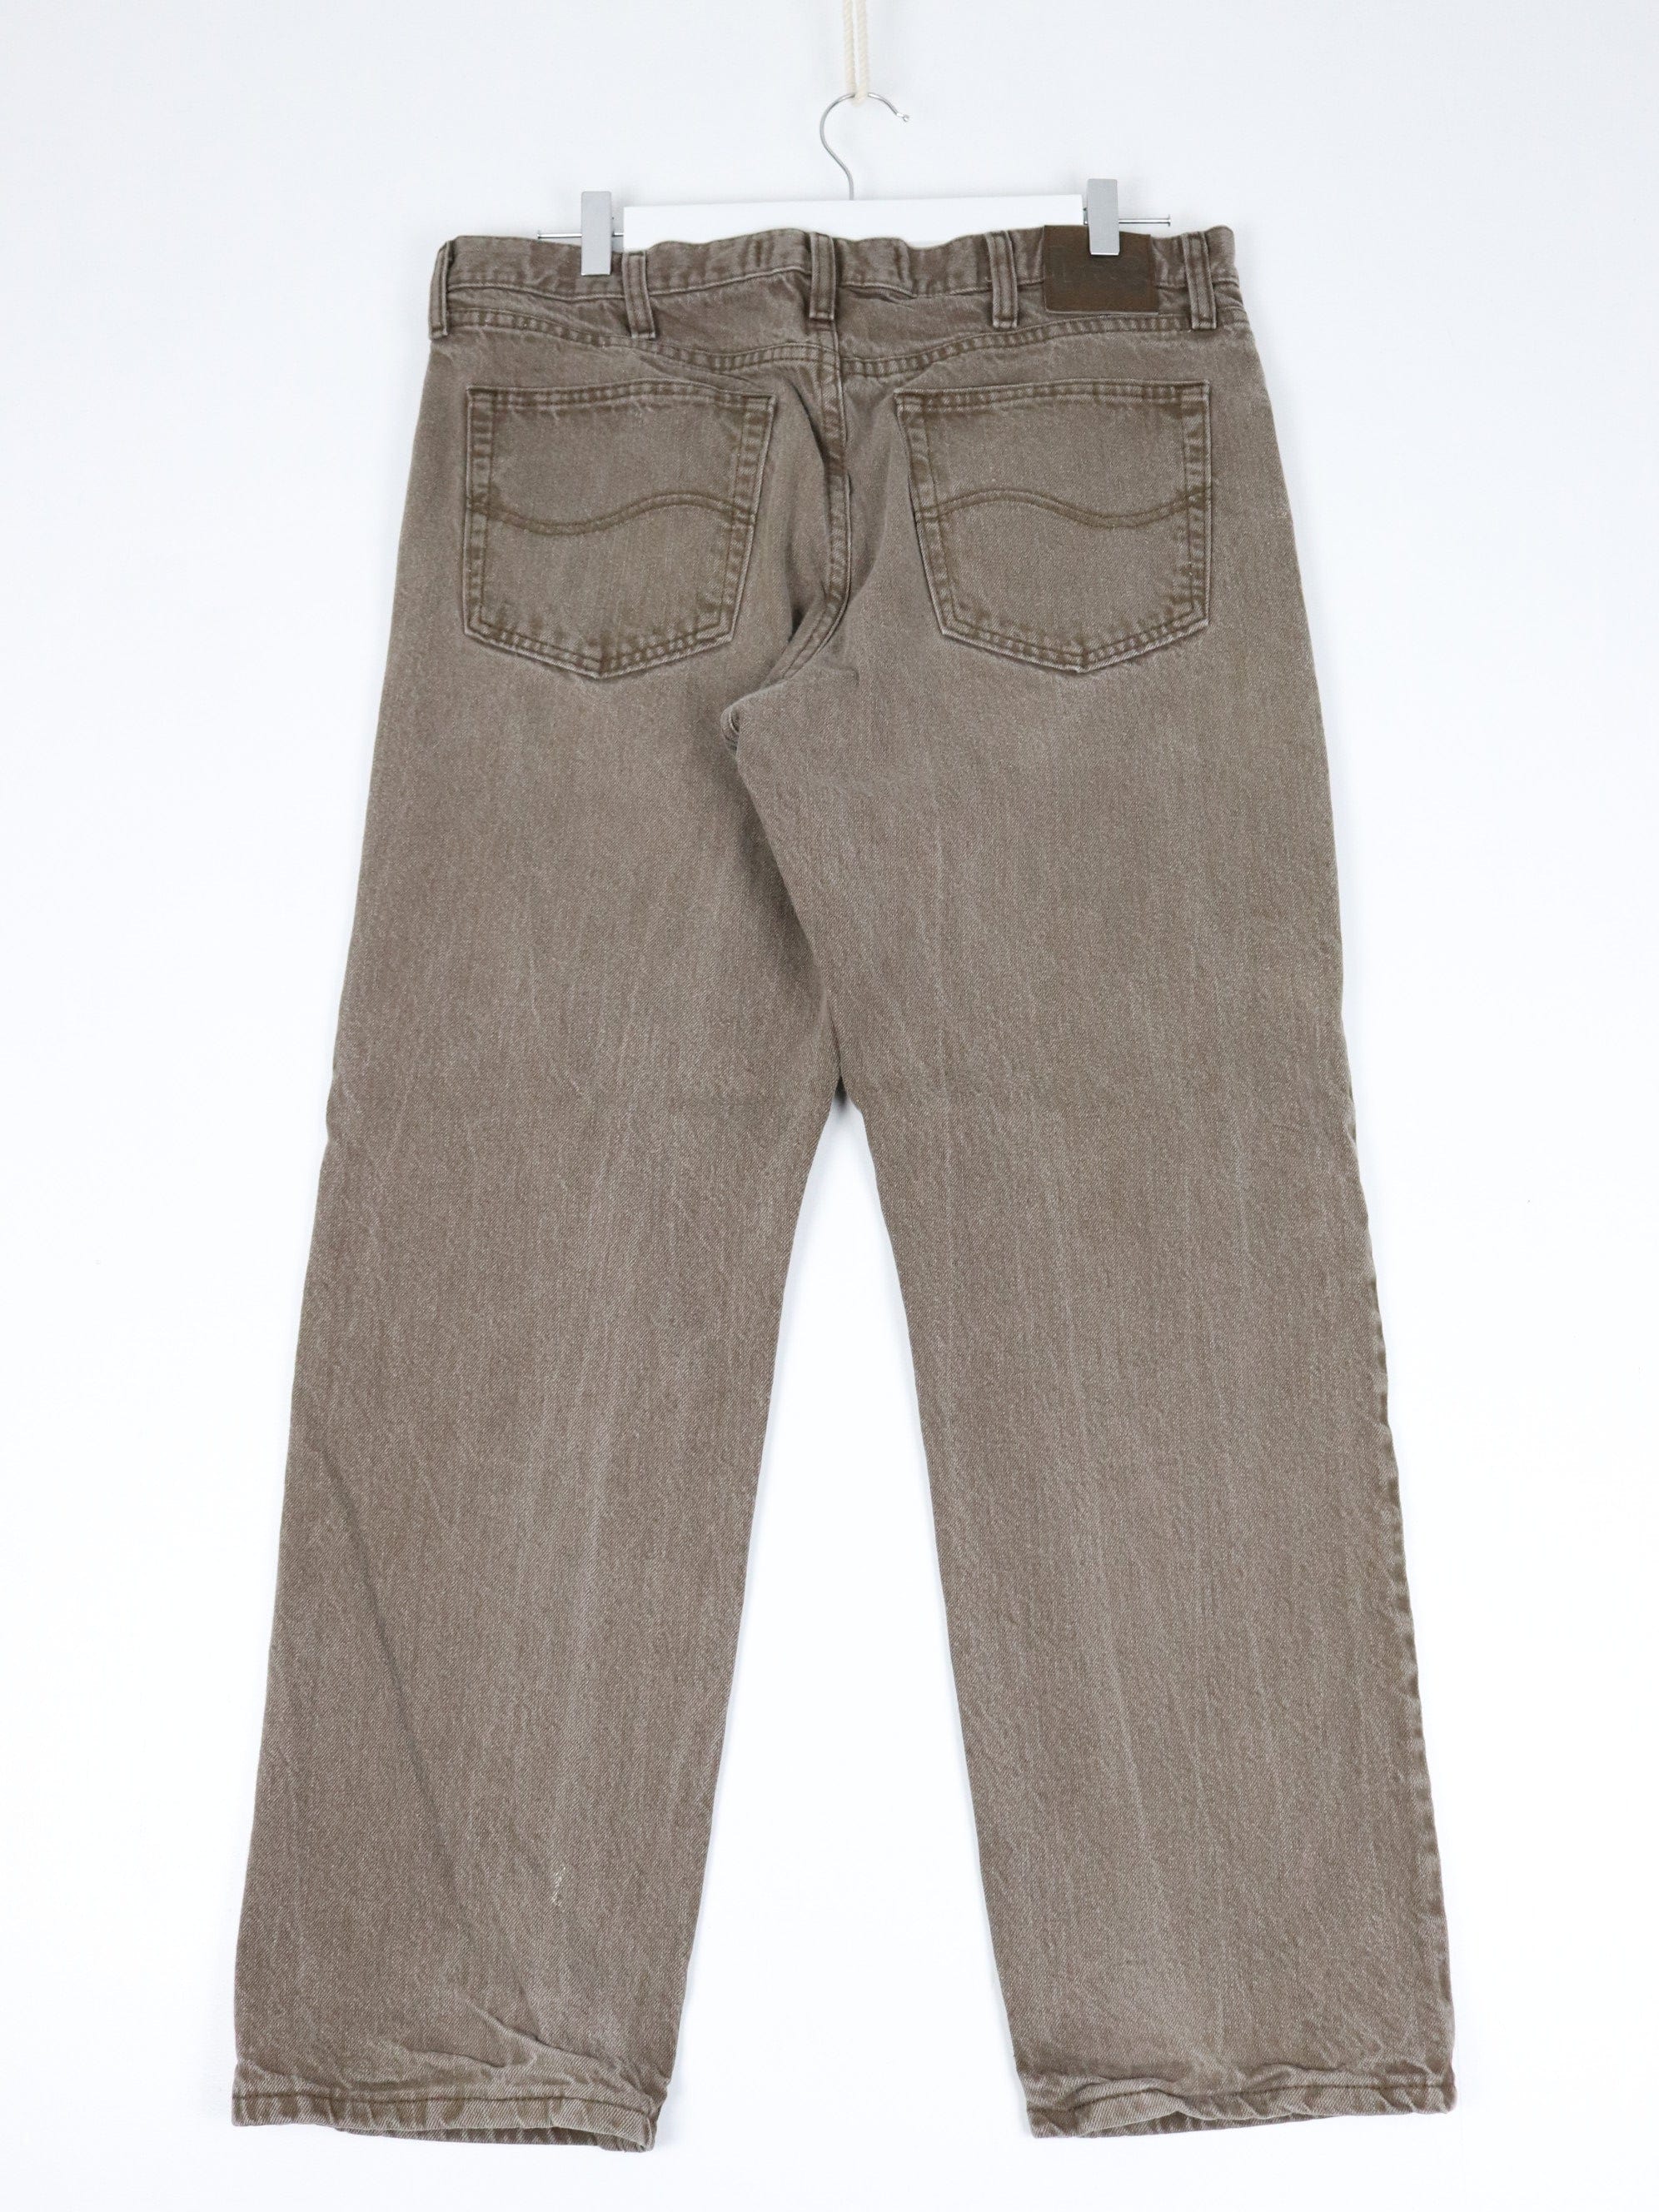 Vintage Lee Pants Mens 36 x 29 Brown Denim Jeans Regular Fit